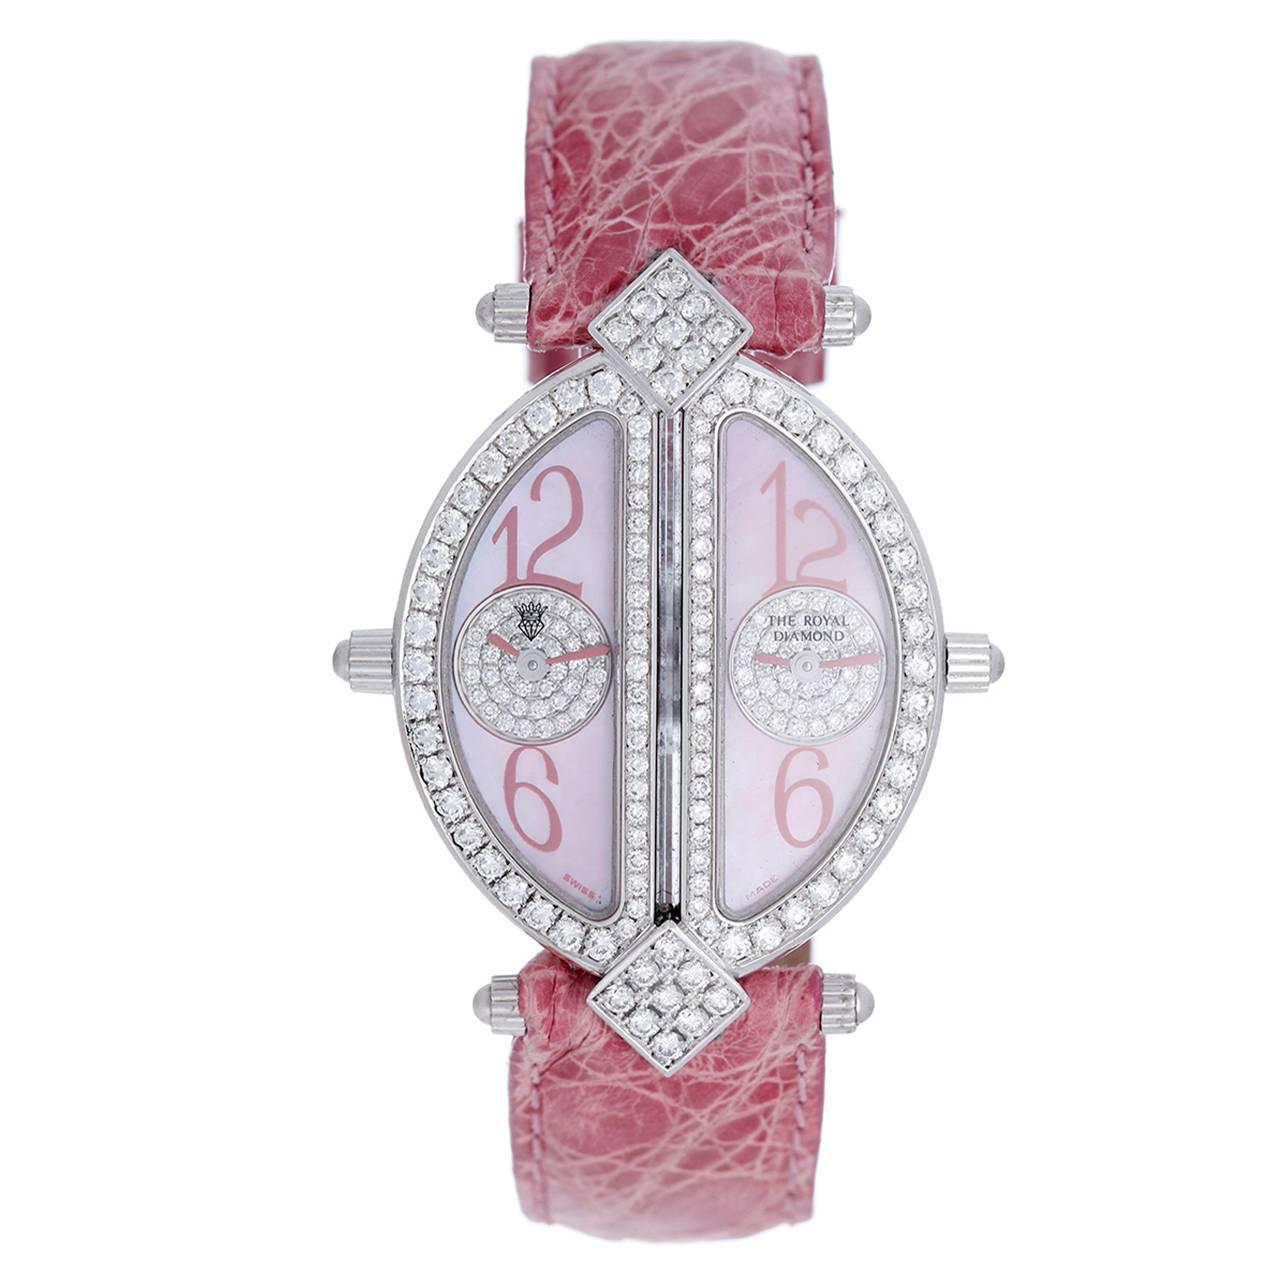 Chatila Lady's White Gold "The Royal Diamond Double Lady" Dual Time Wristwatch